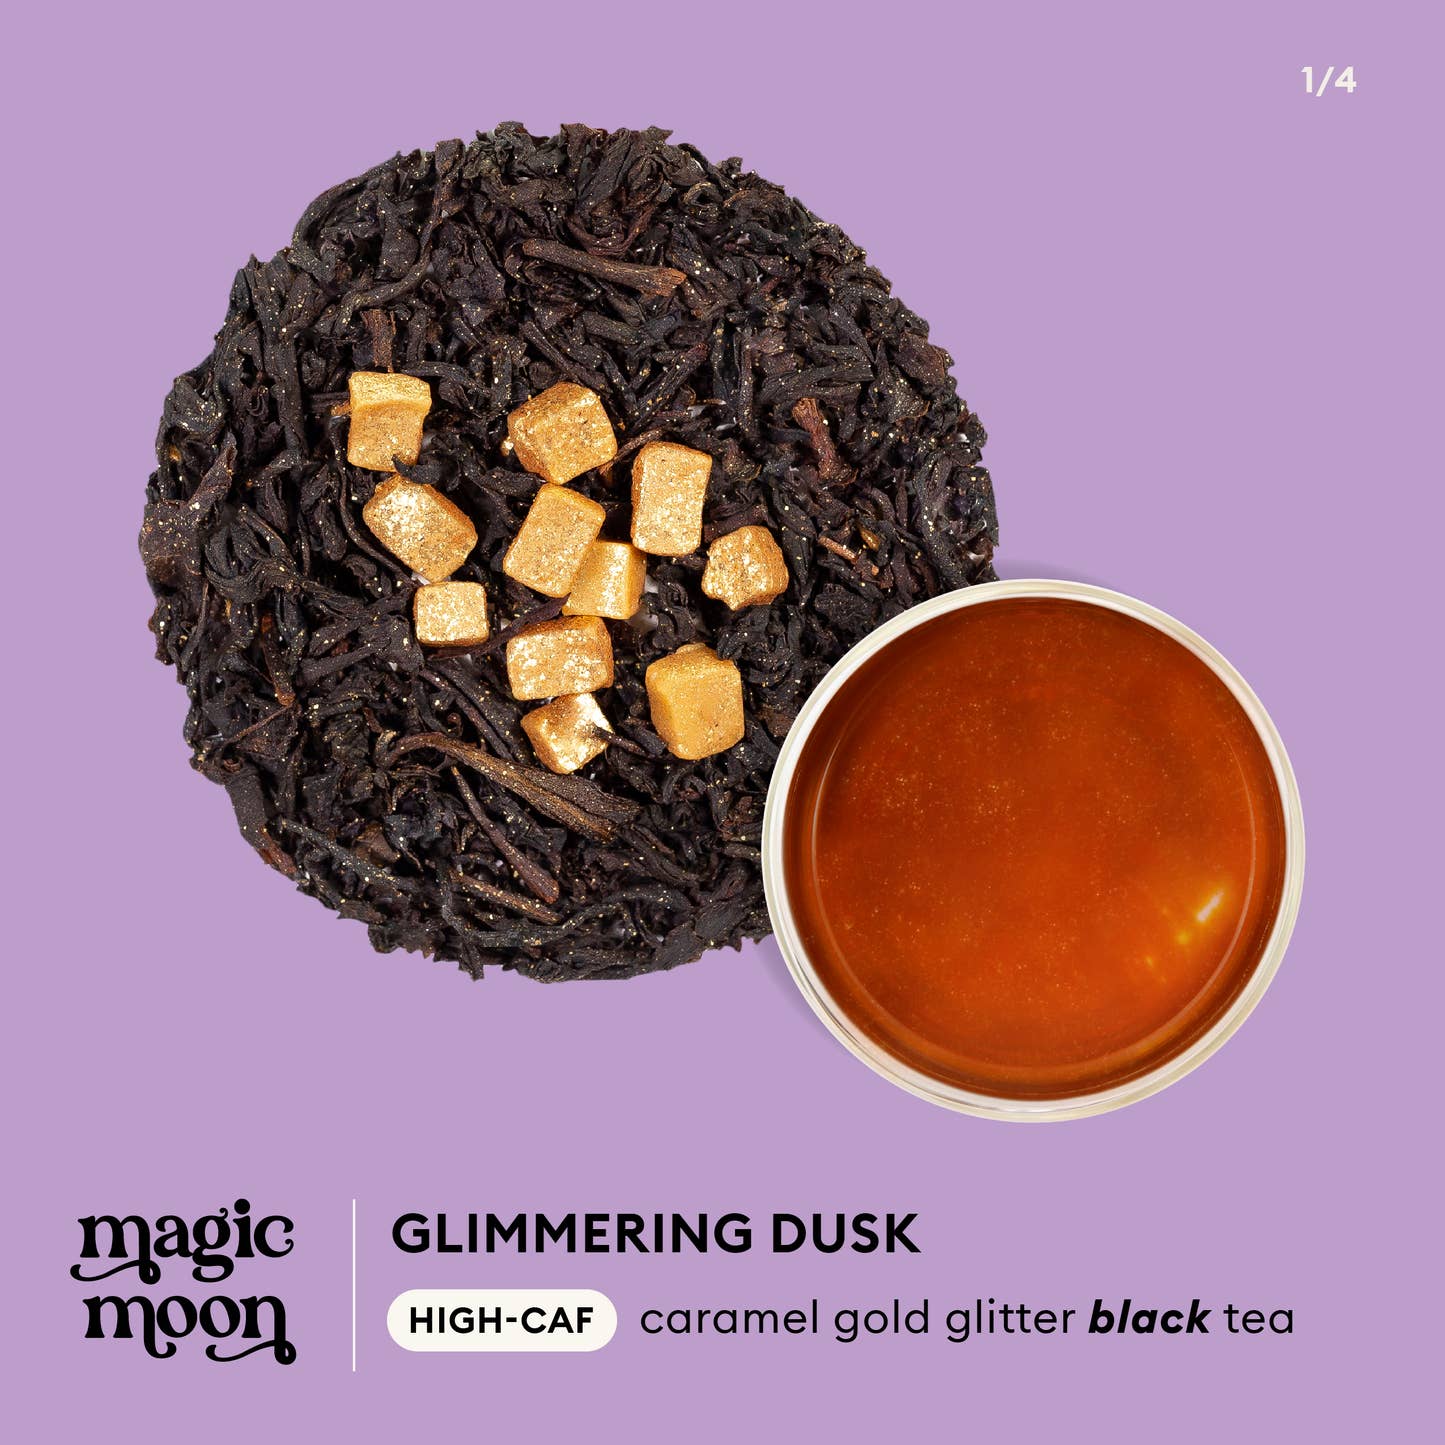 Magic Moon - Glimmering Dusk* high-caf, caramel gold glitter tea infographic